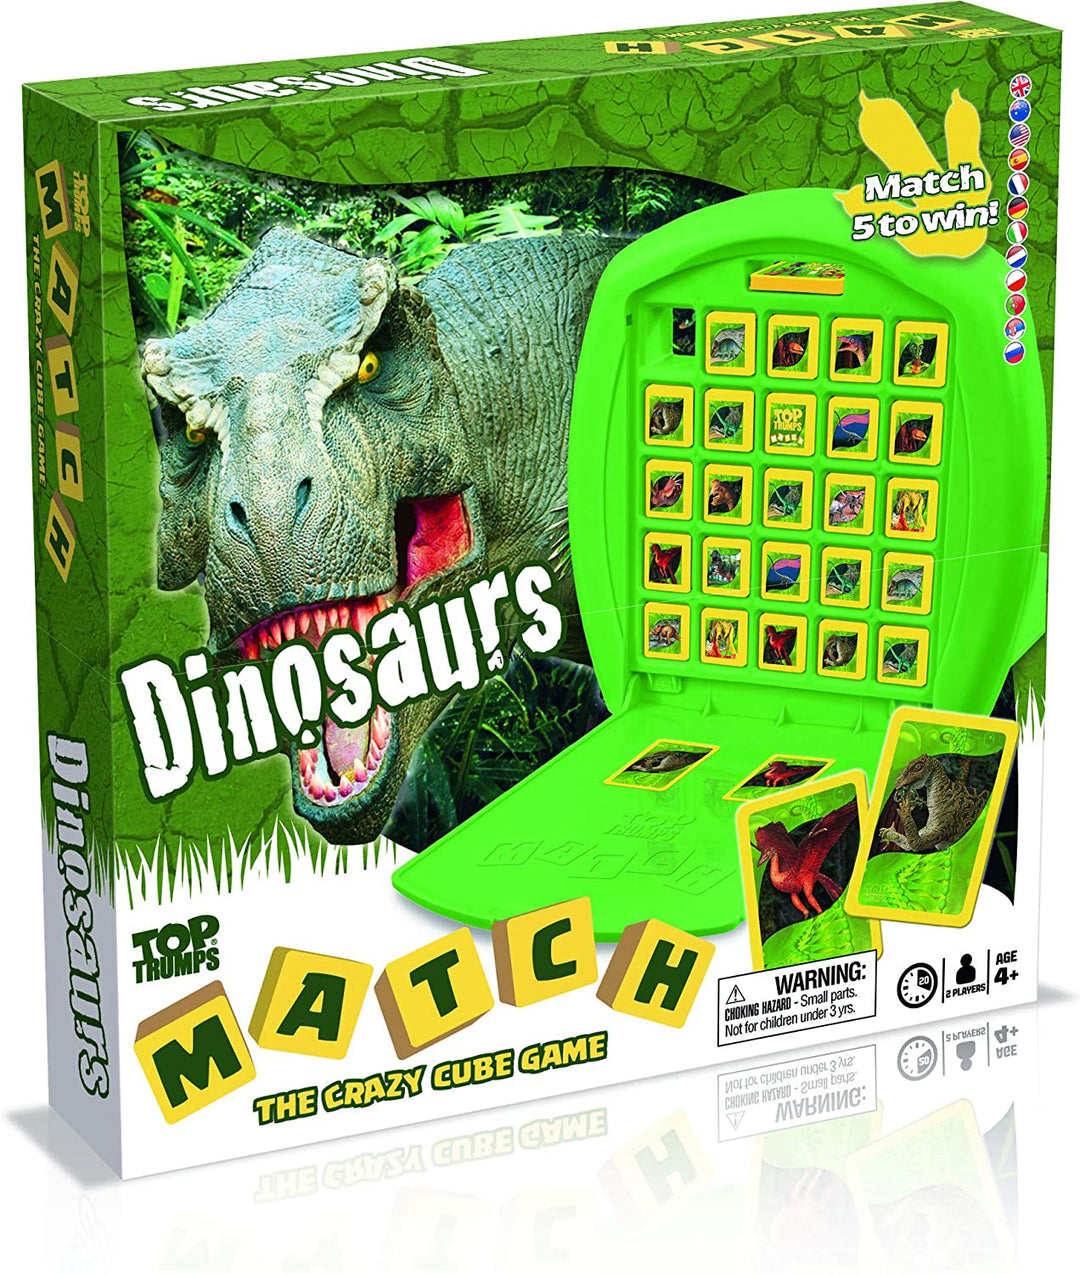 Dinosaurier Top Trumps Match Brettspiel